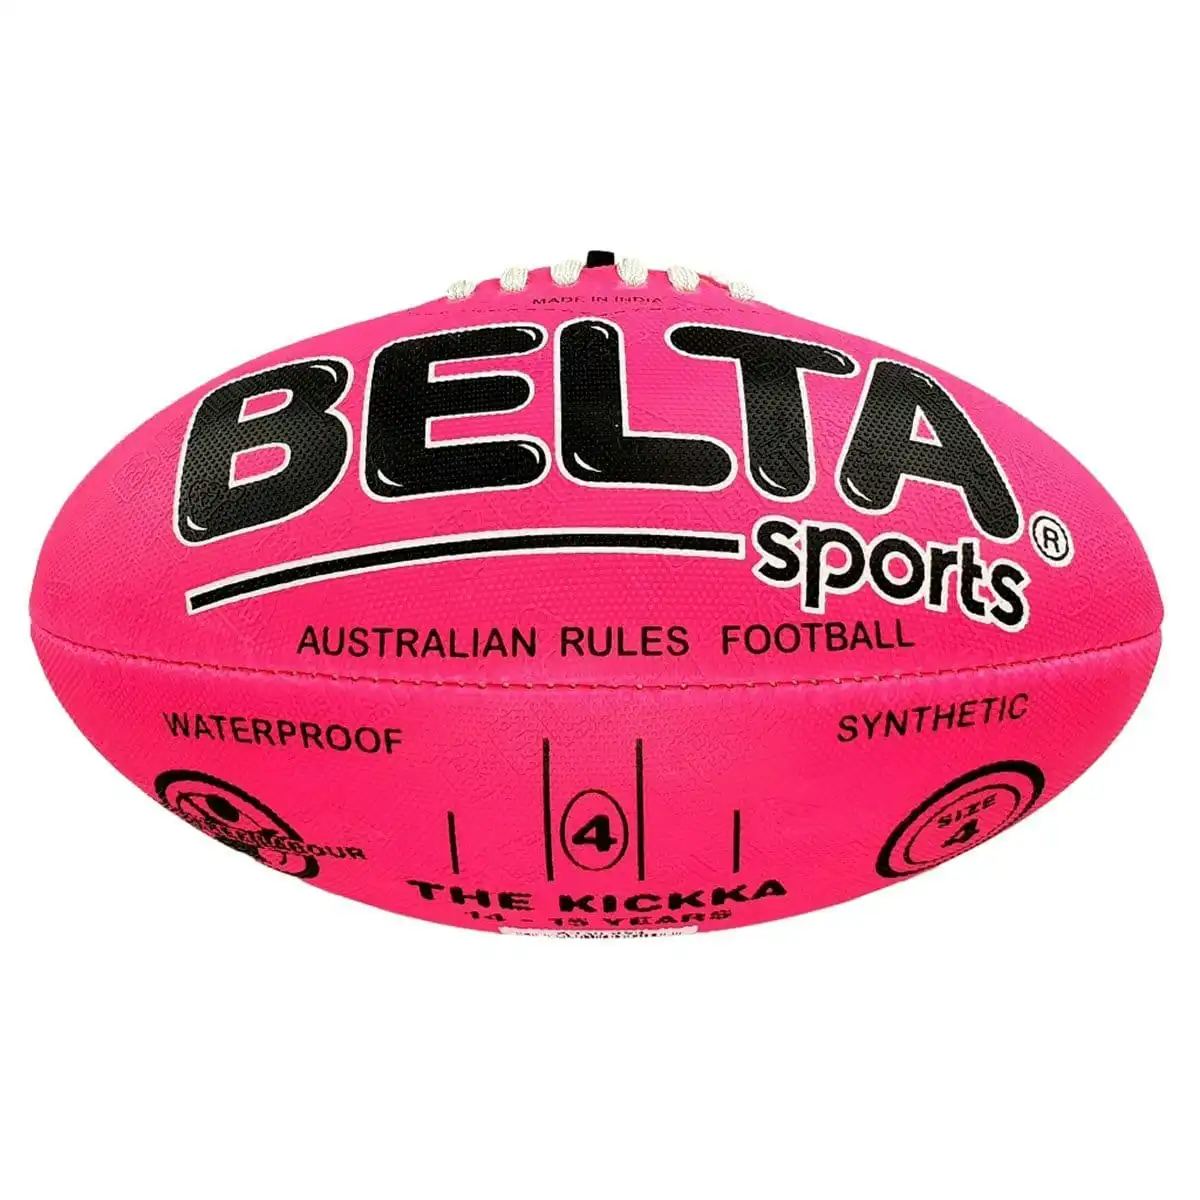 Belta Sports Size 4 Football - Pink